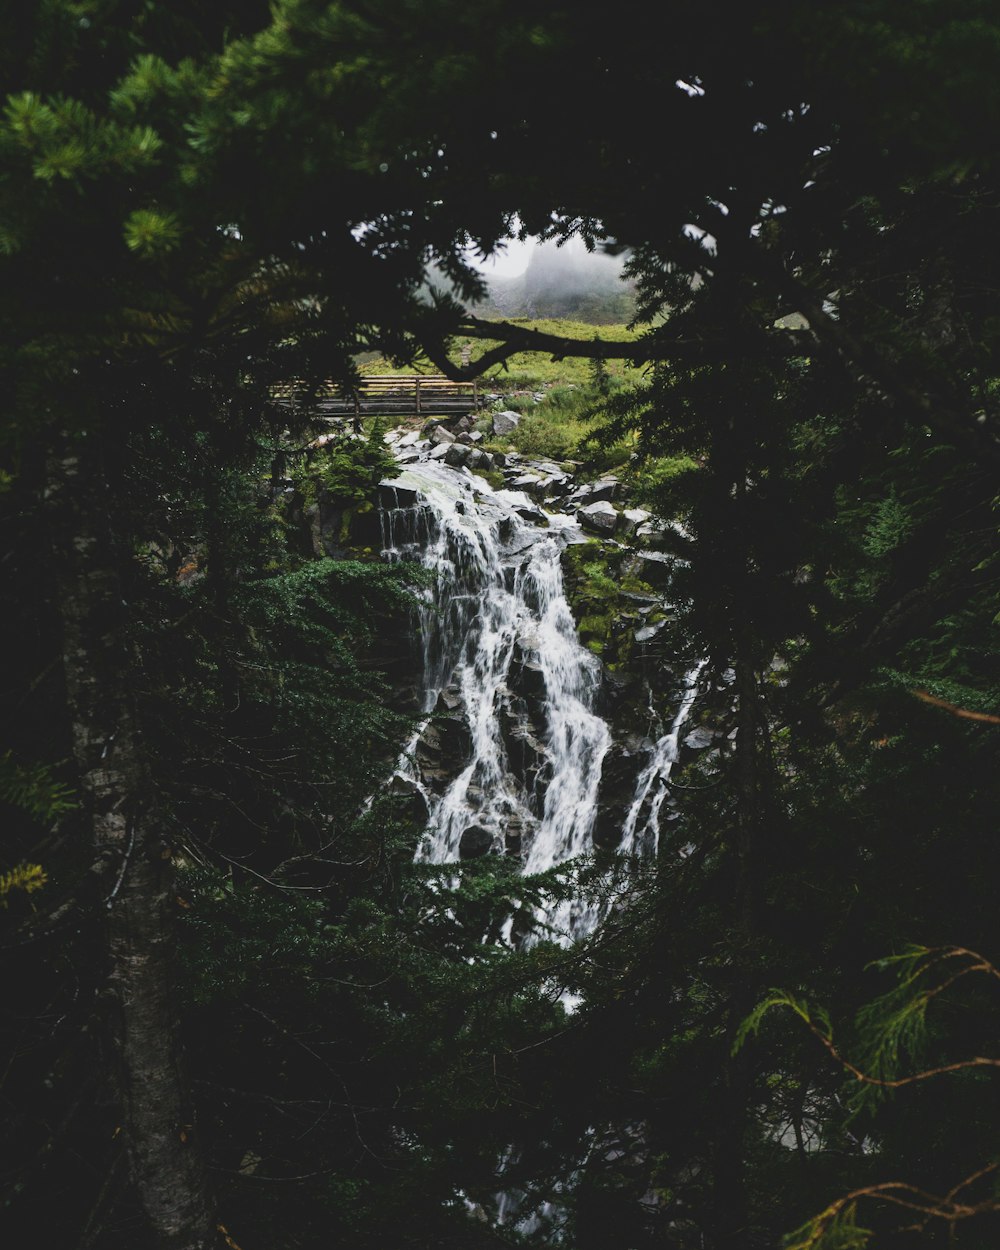 waterfalls near green leafed trees